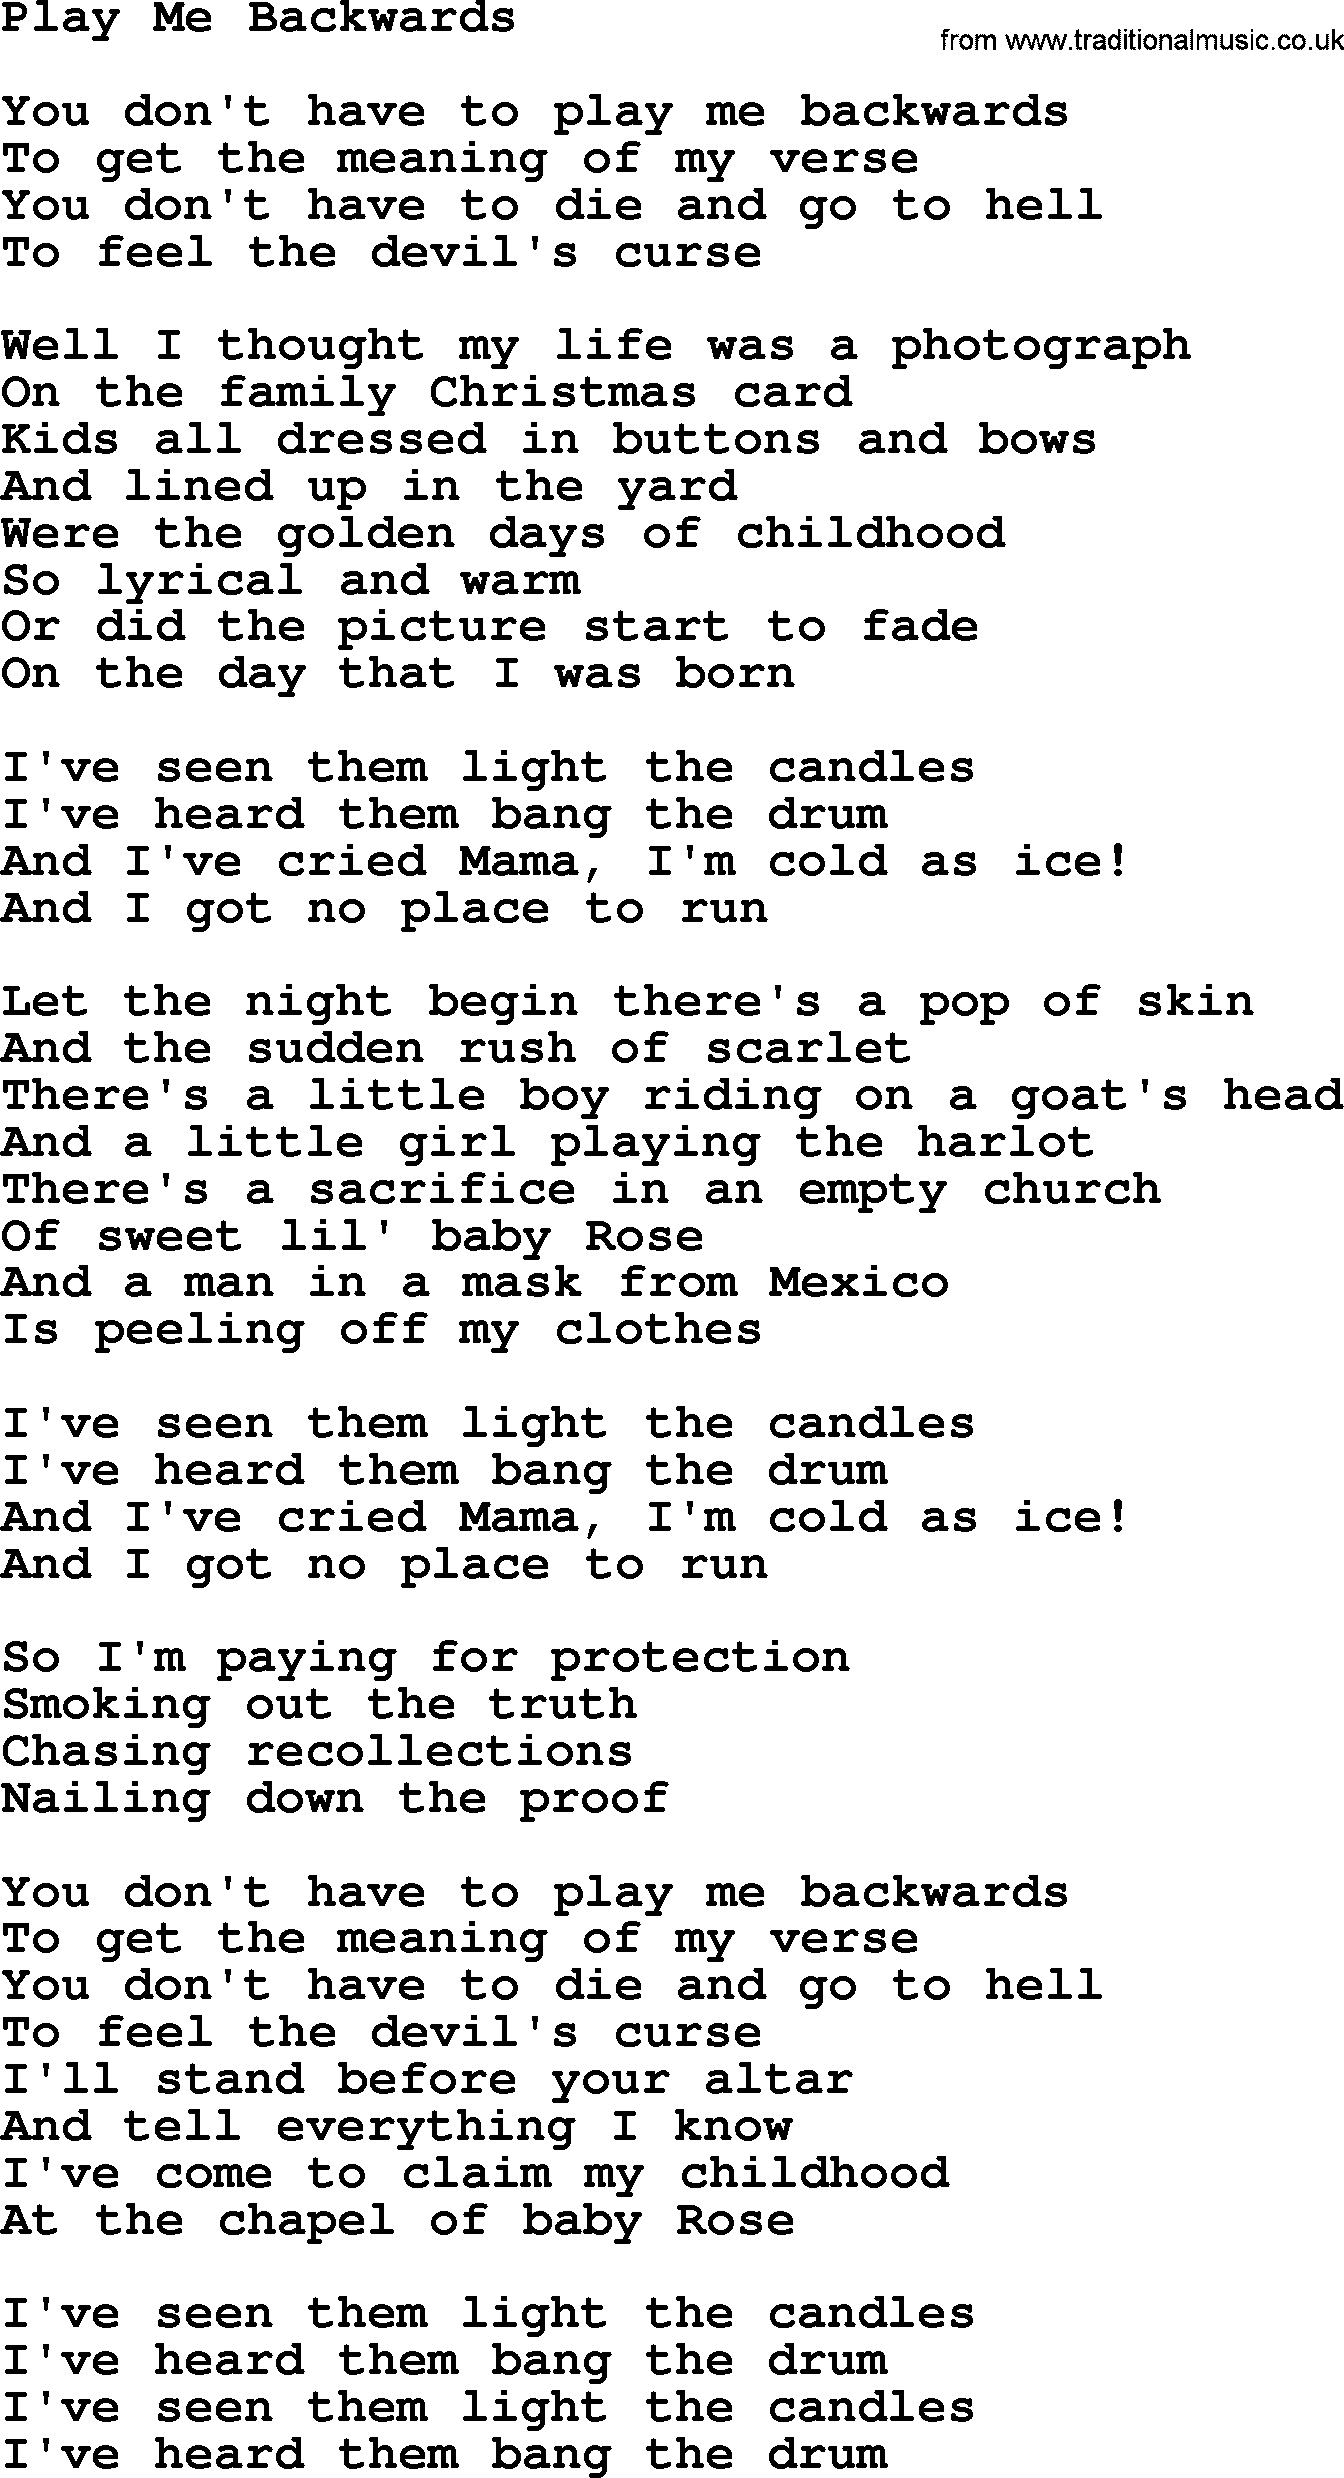 Joan Baez song Play Me Backwards, lyrics